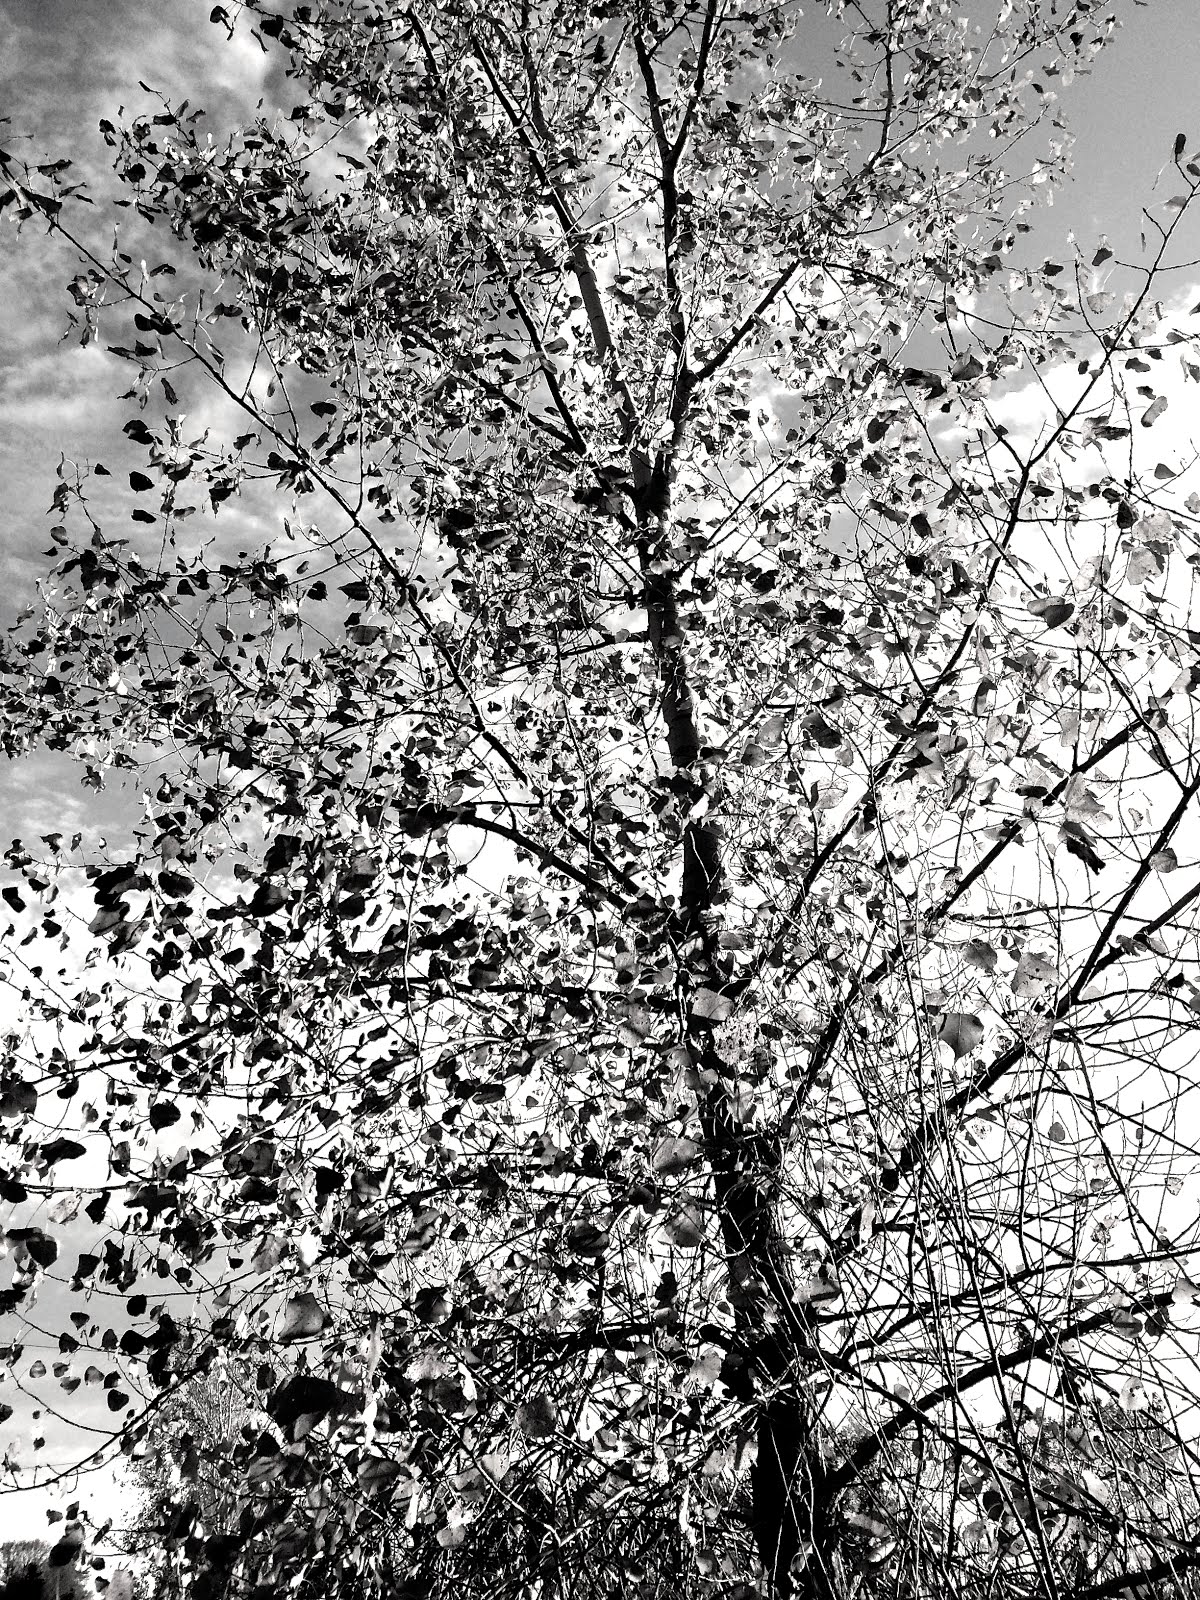 Tree in Fall Bloom.